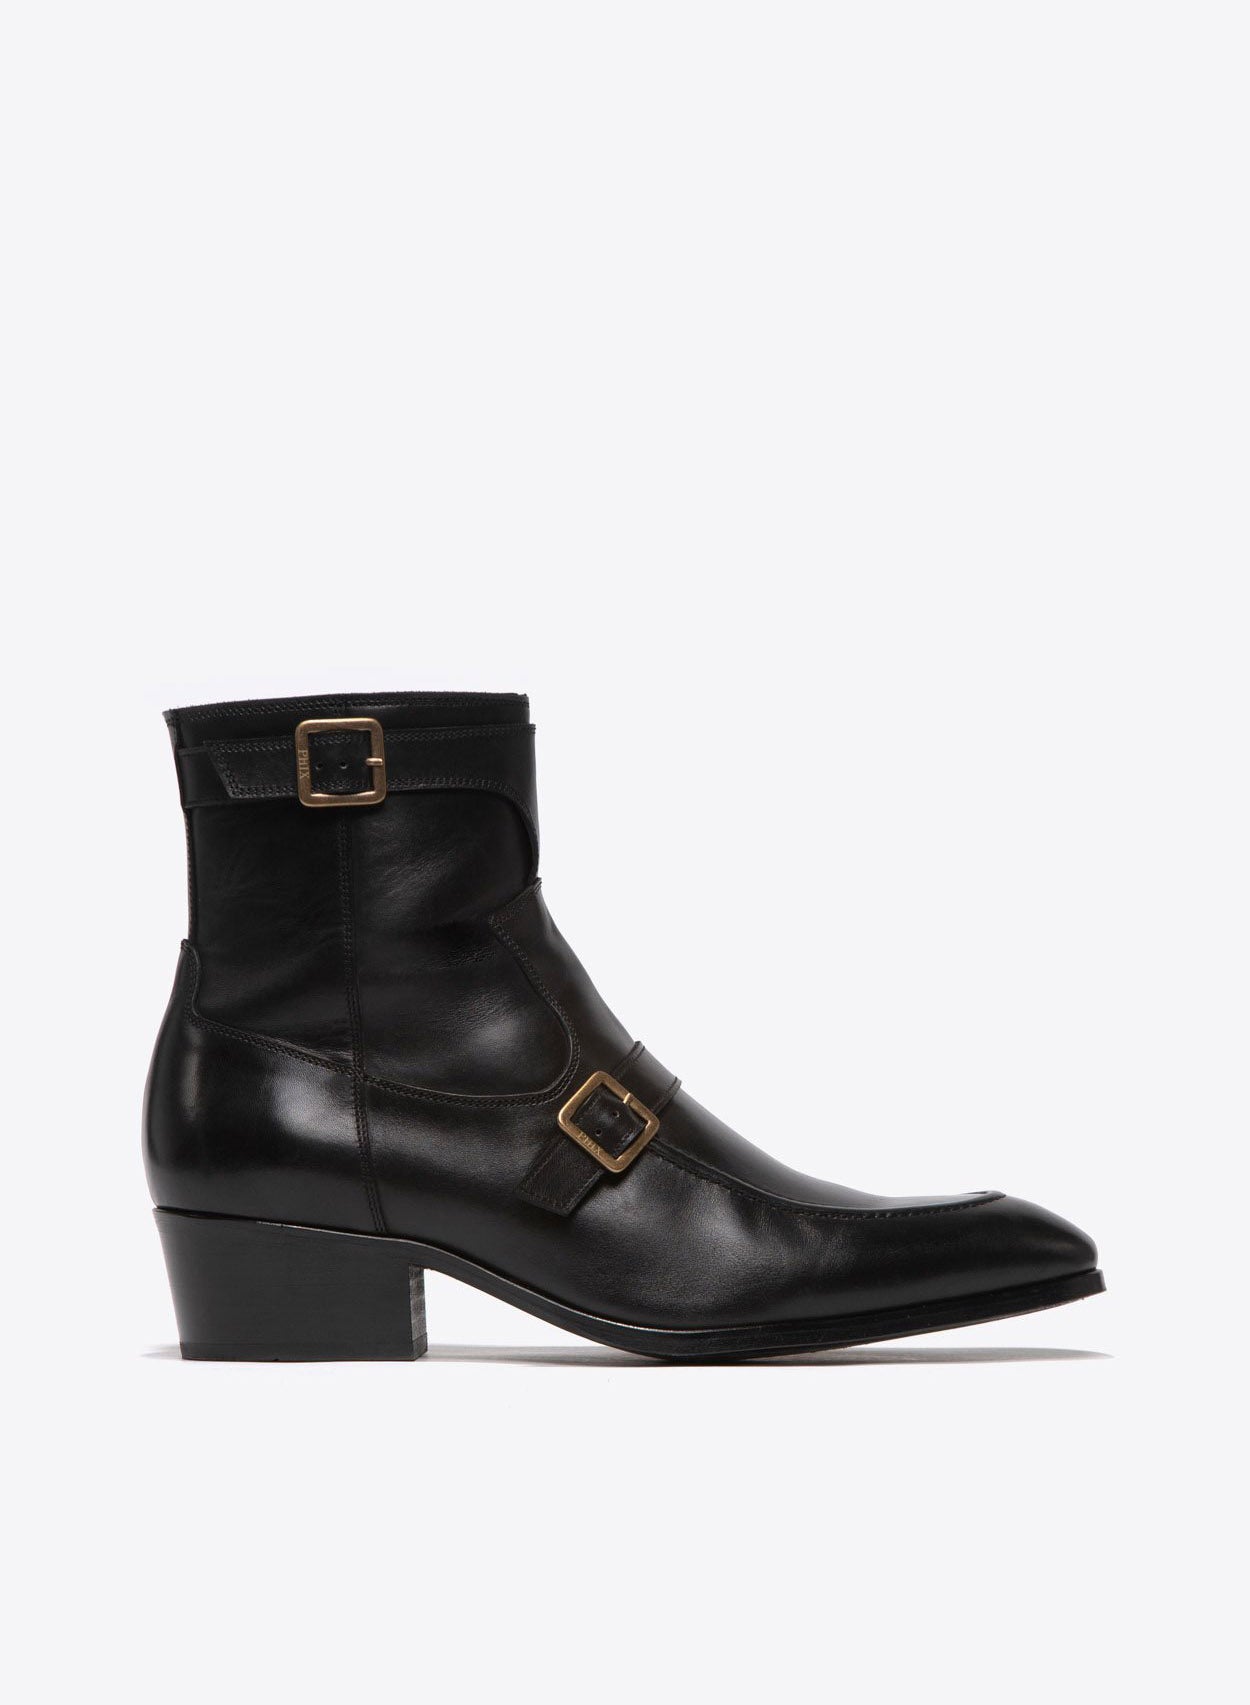 Monique 50mm Black Leather Boot & Phix